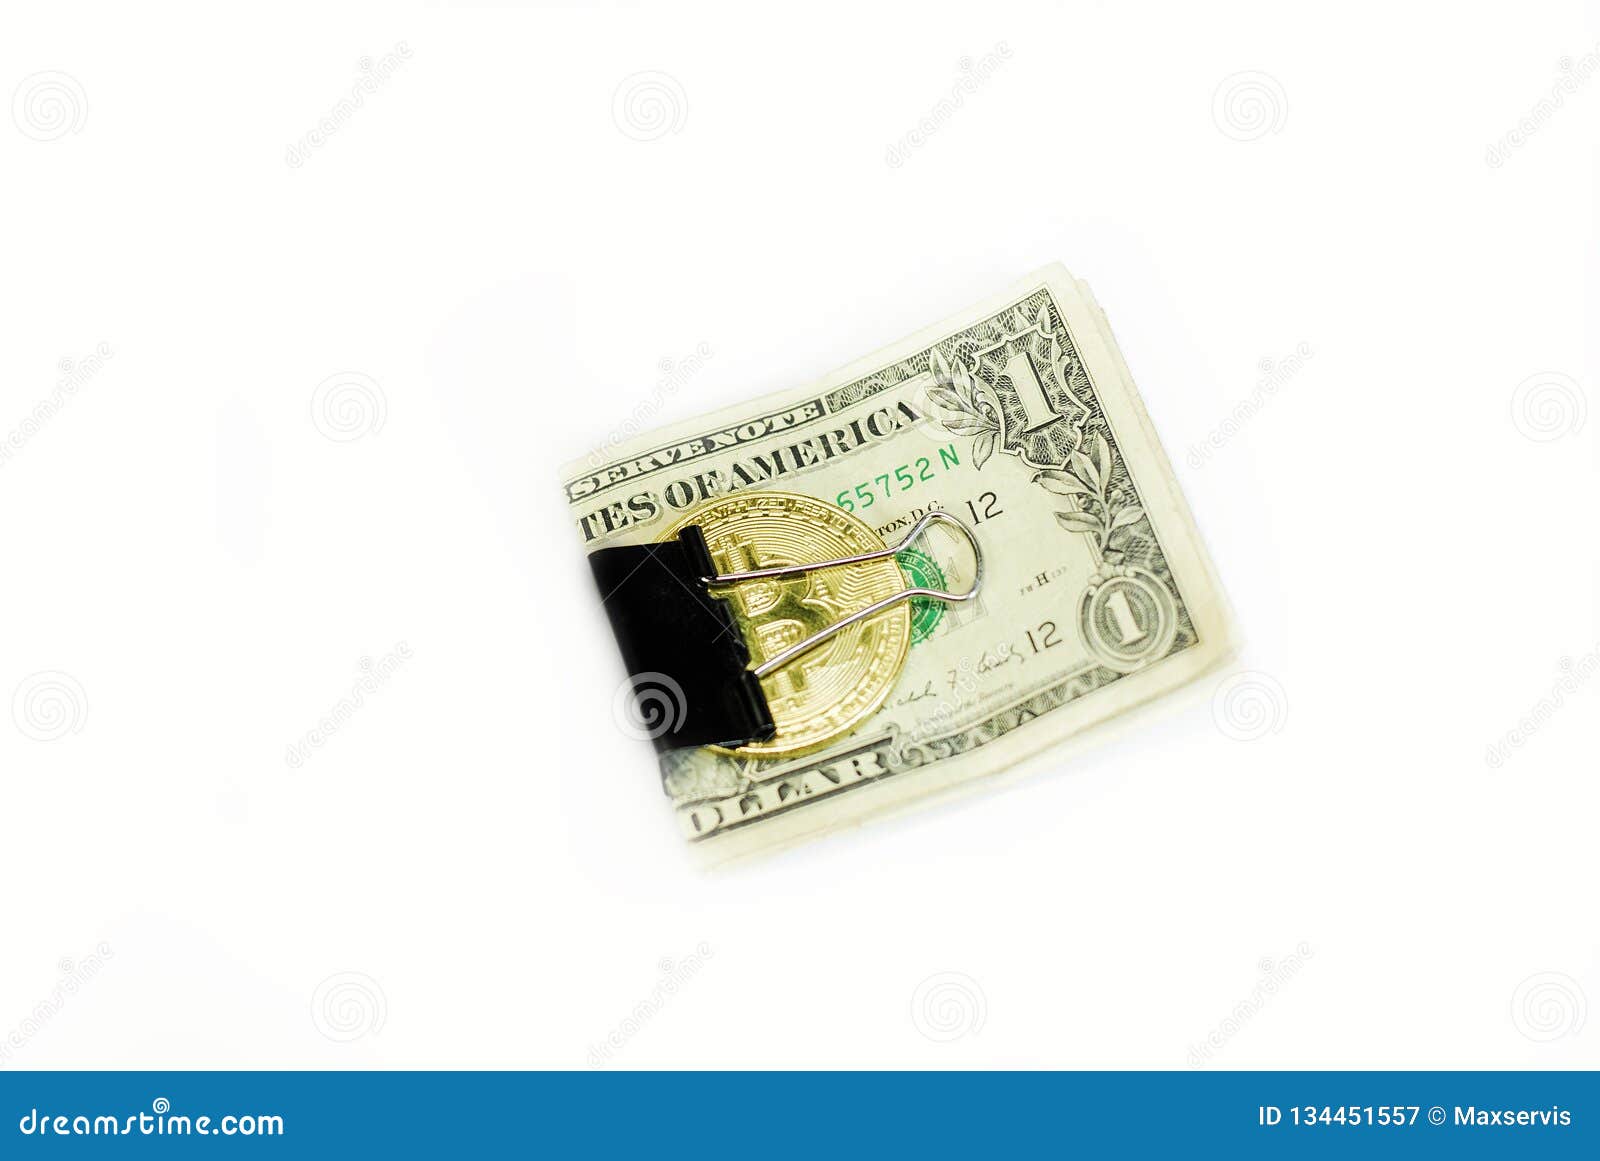 Money Laundering Bitcoin Stock Image Image Of Angle 134451557 - 